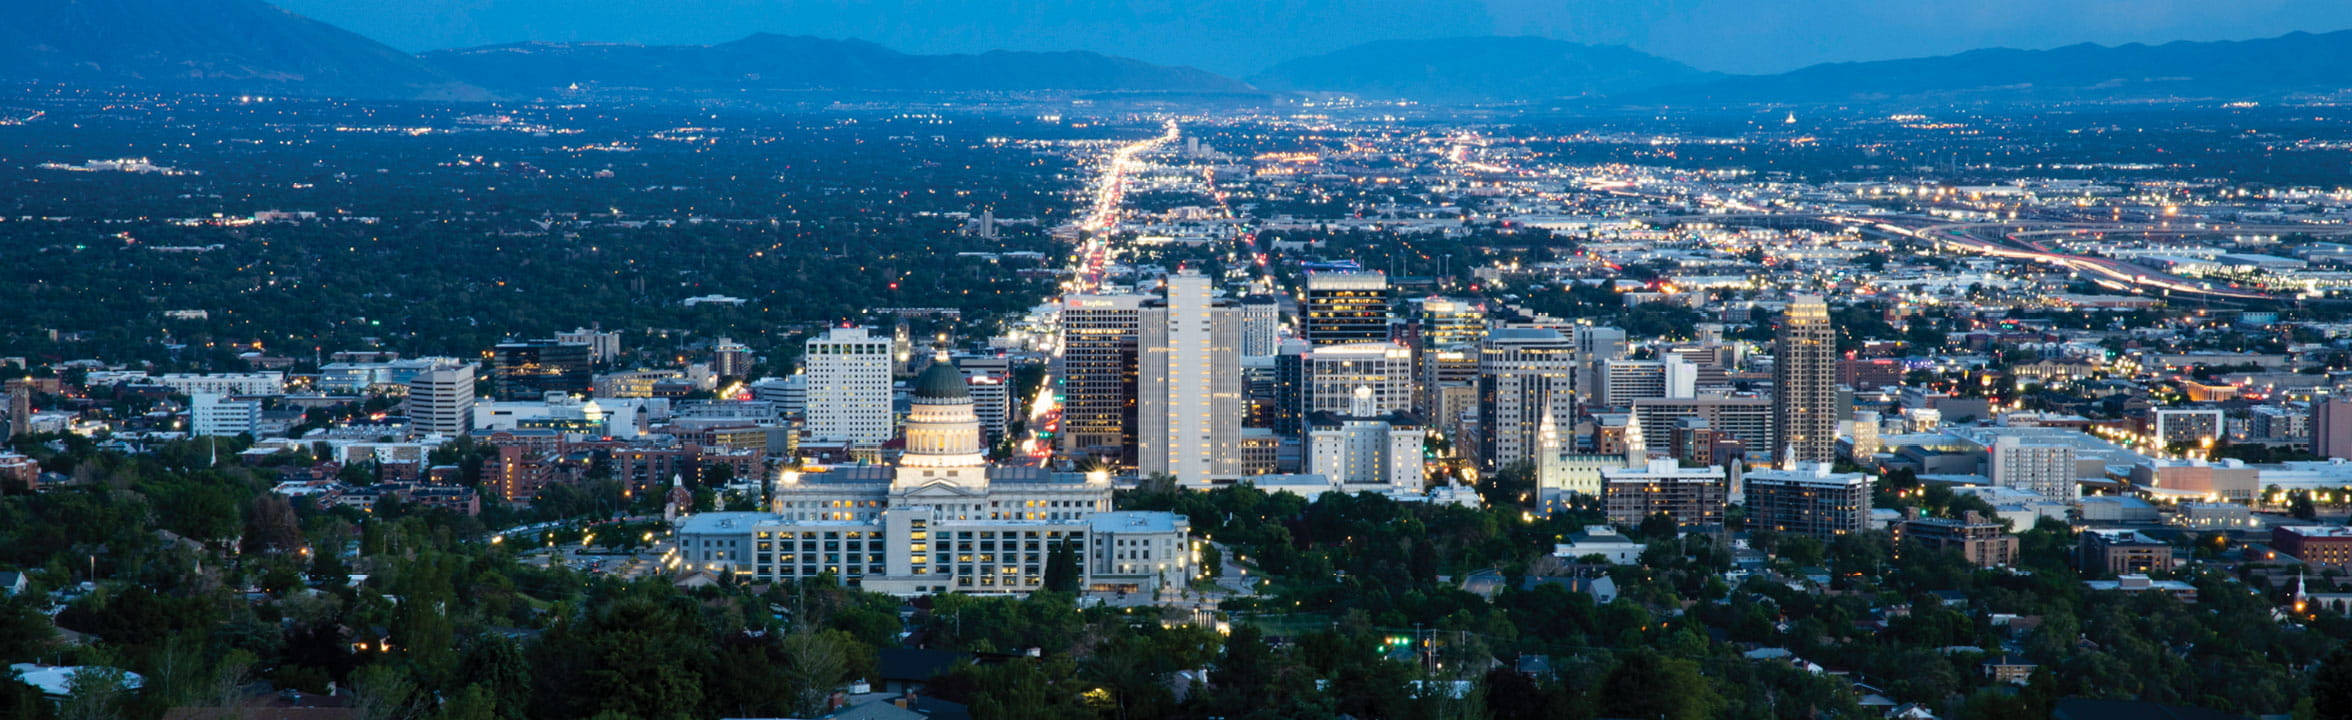 Vistapanoramica Di Salt Lake City Sfondo